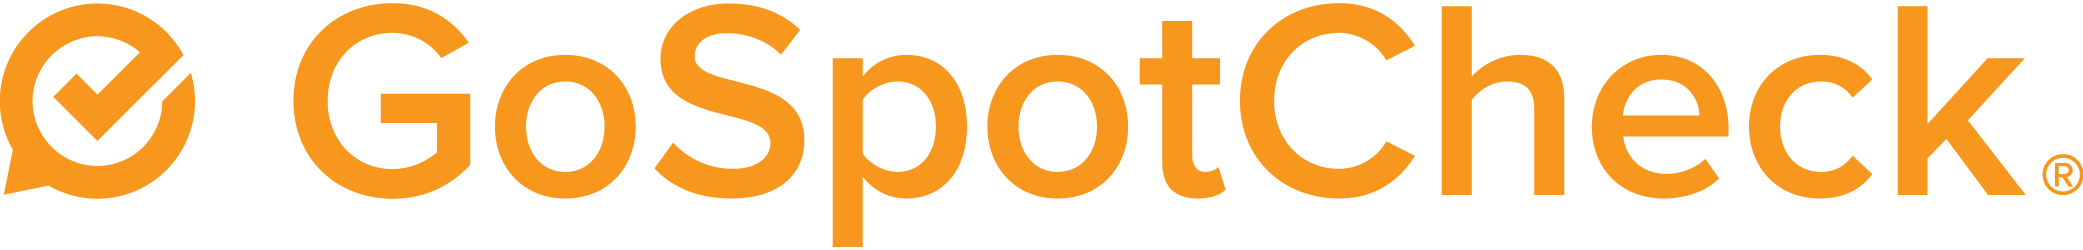 GoSpotCheck logo